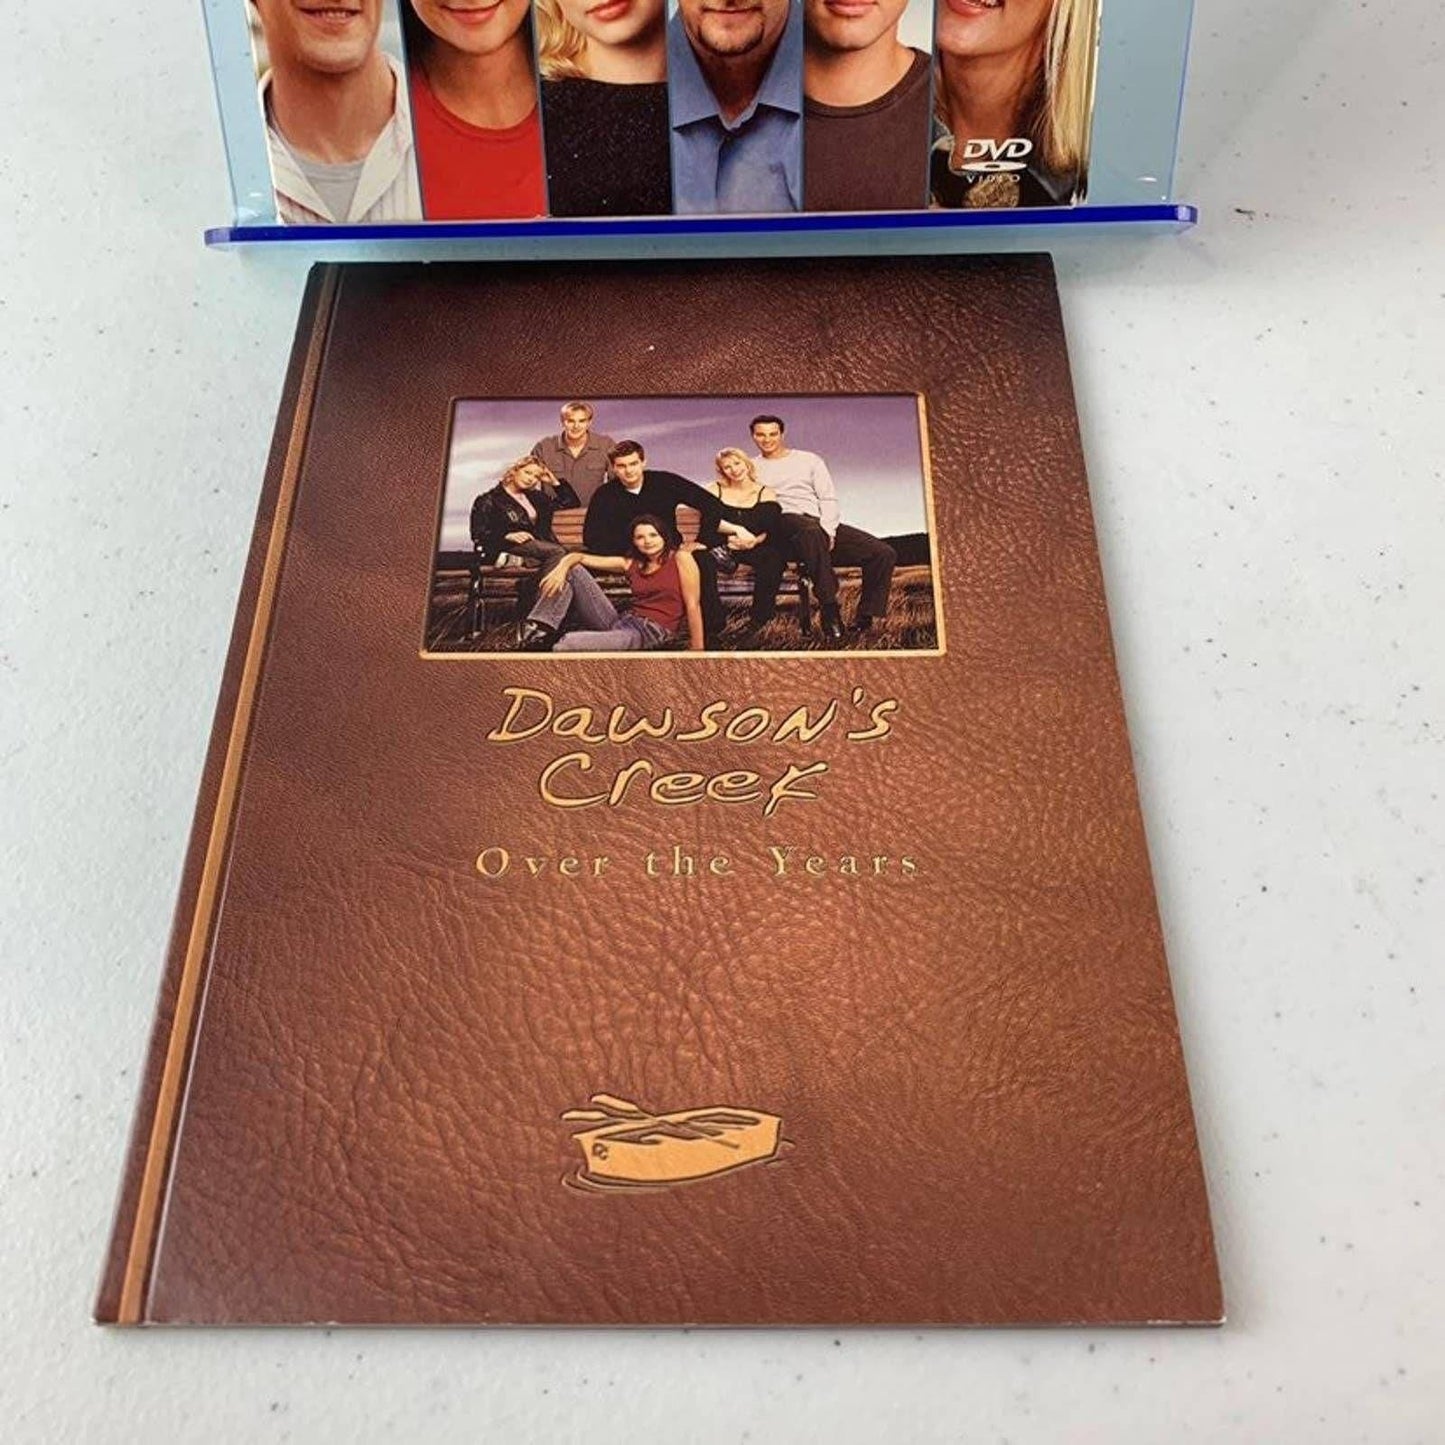 Dawson's Creek Sixth Season DVD